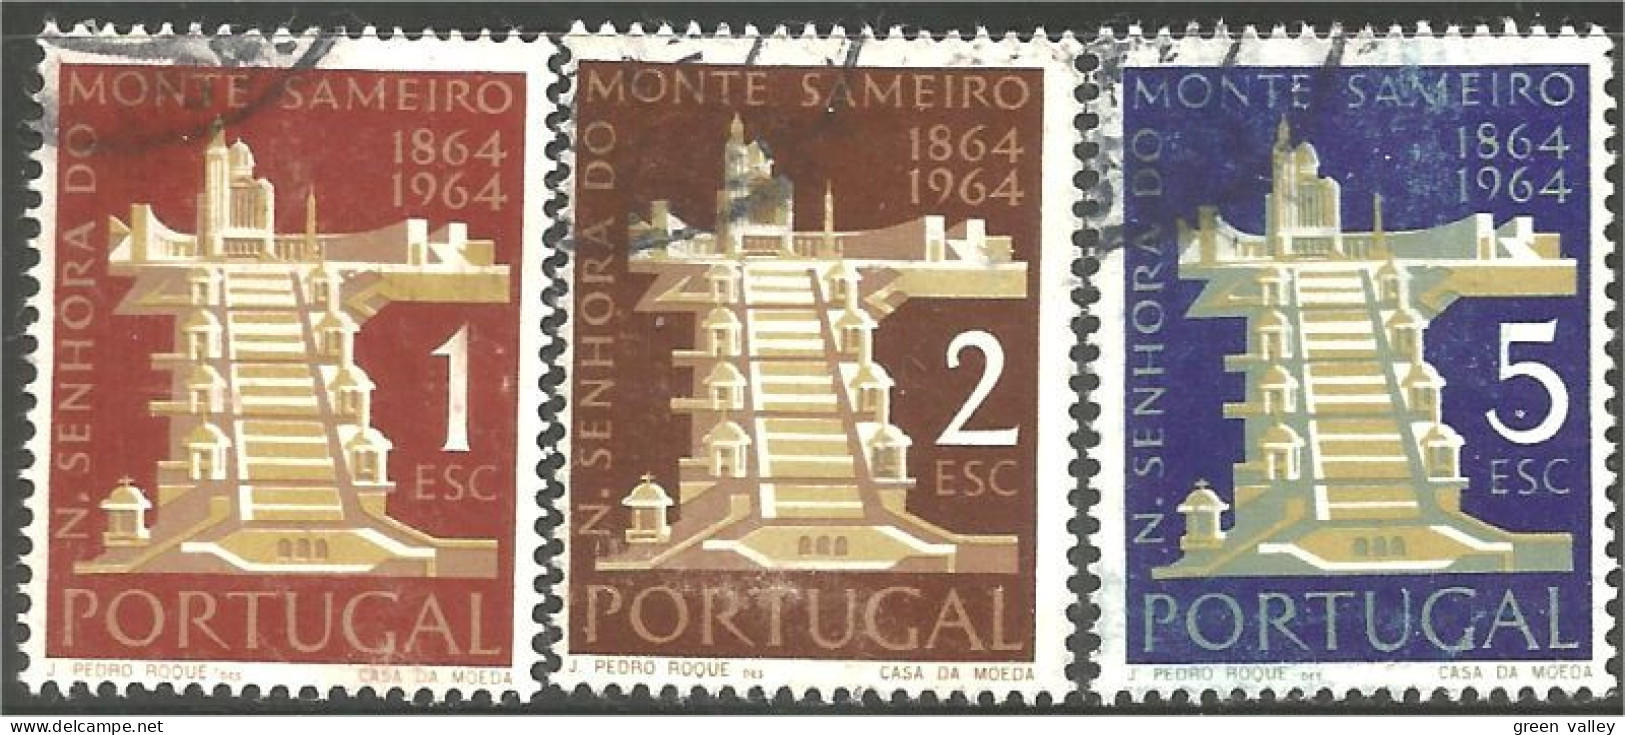 742 Portugal Eglise Mt Sameiro Church (POR-108) - Used Stamps